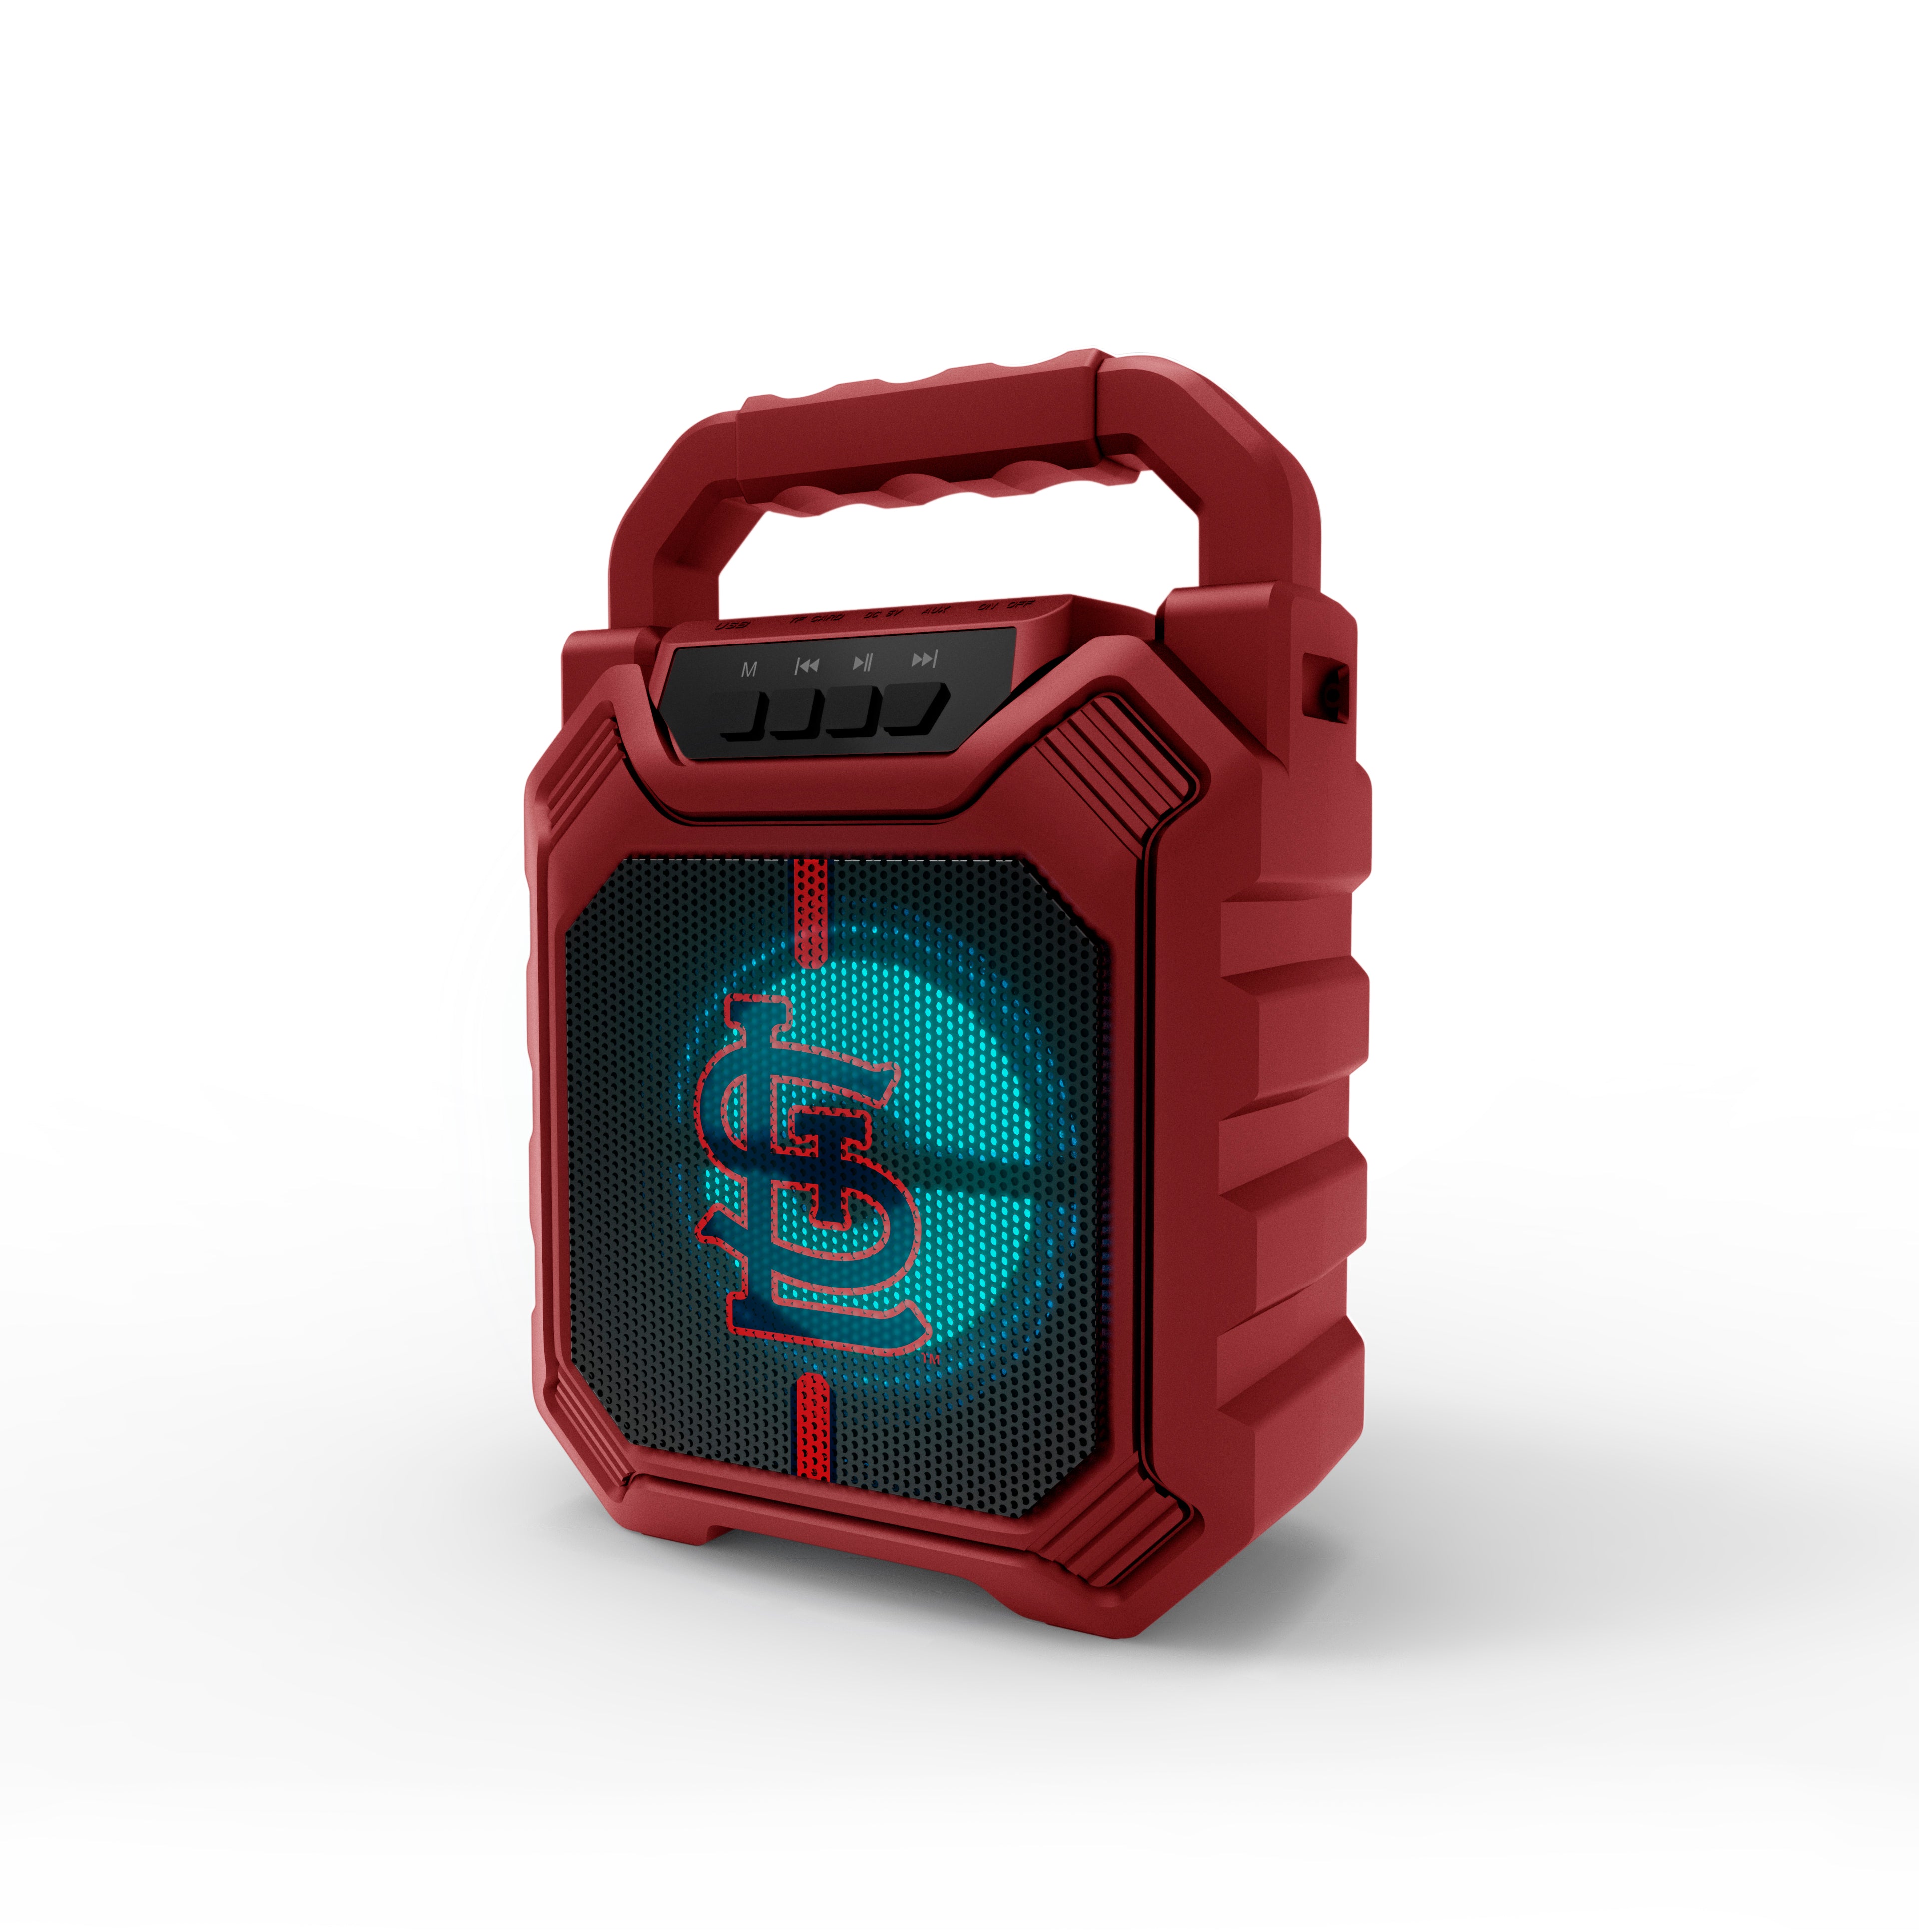 MLB Shockbox XL2 Bluetooth Speaker